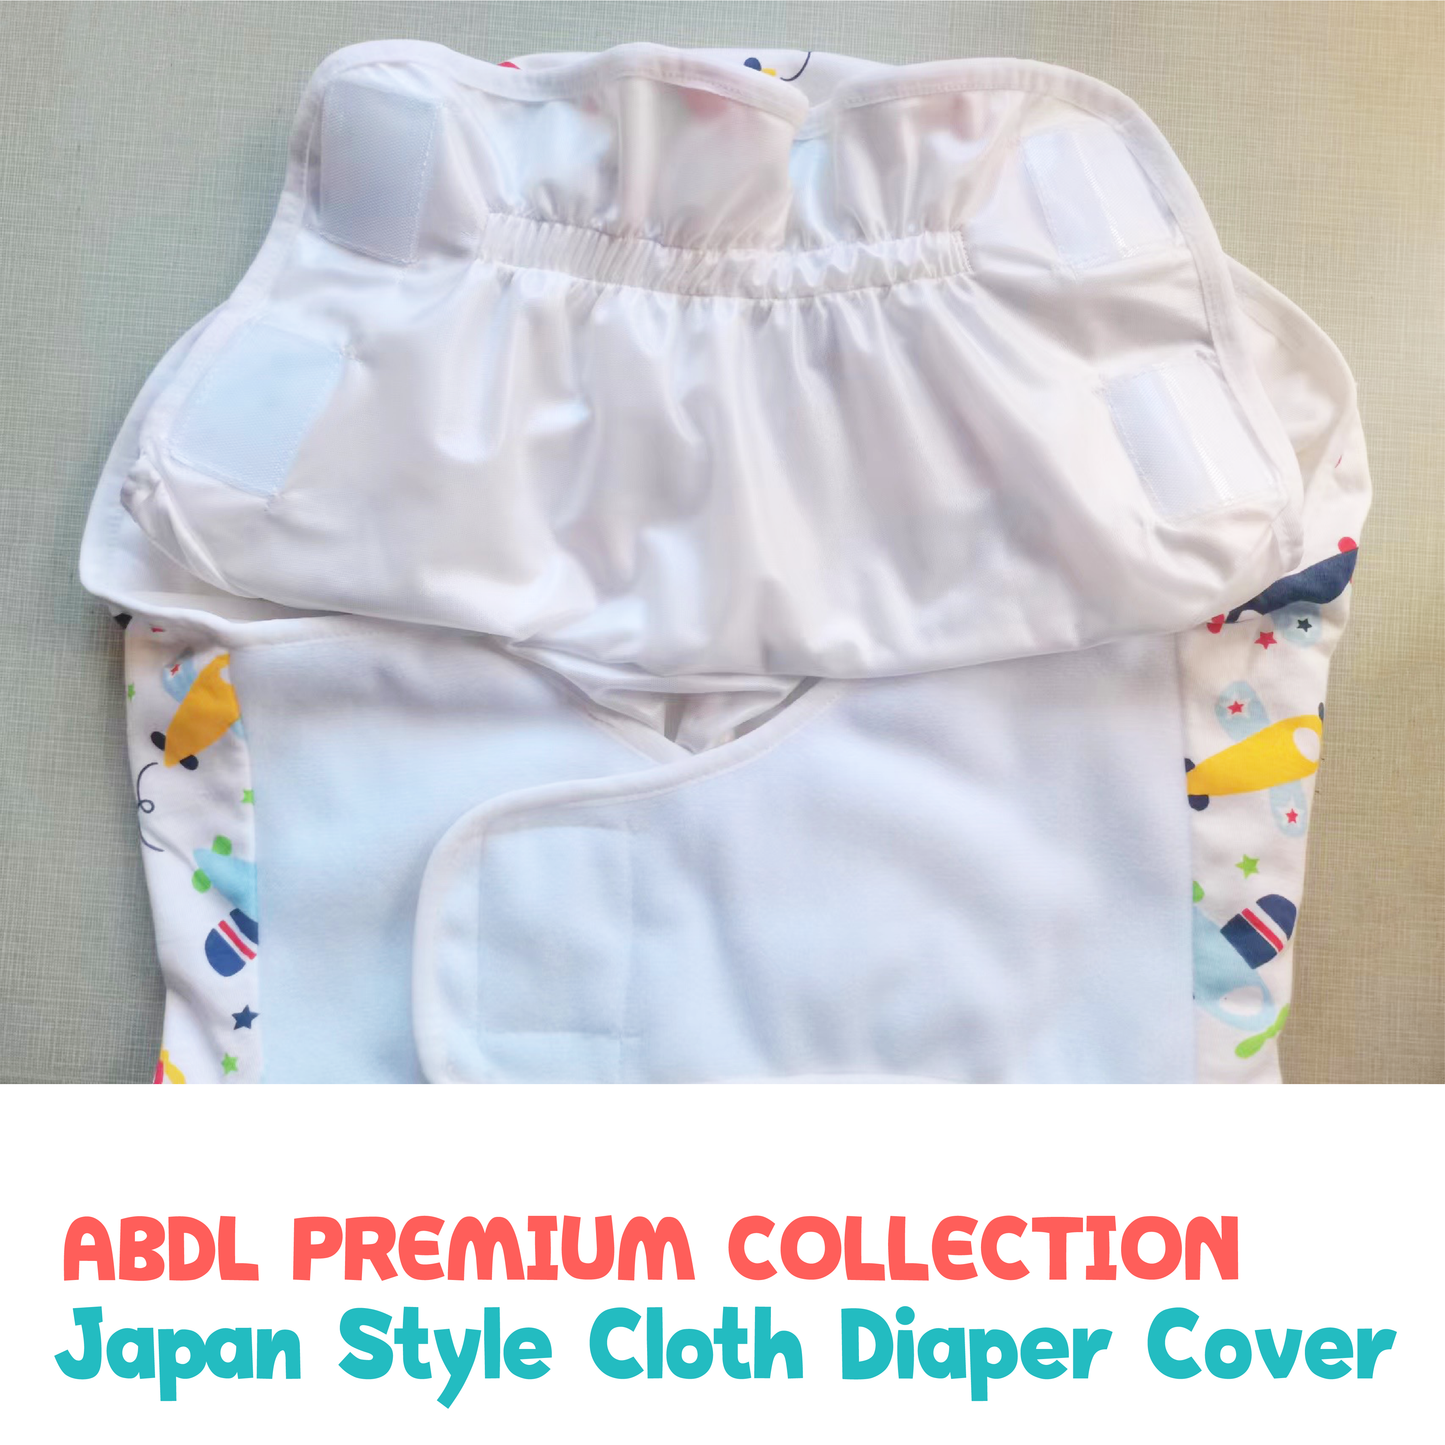 Japan Cloth Diaper Cover - Airplane